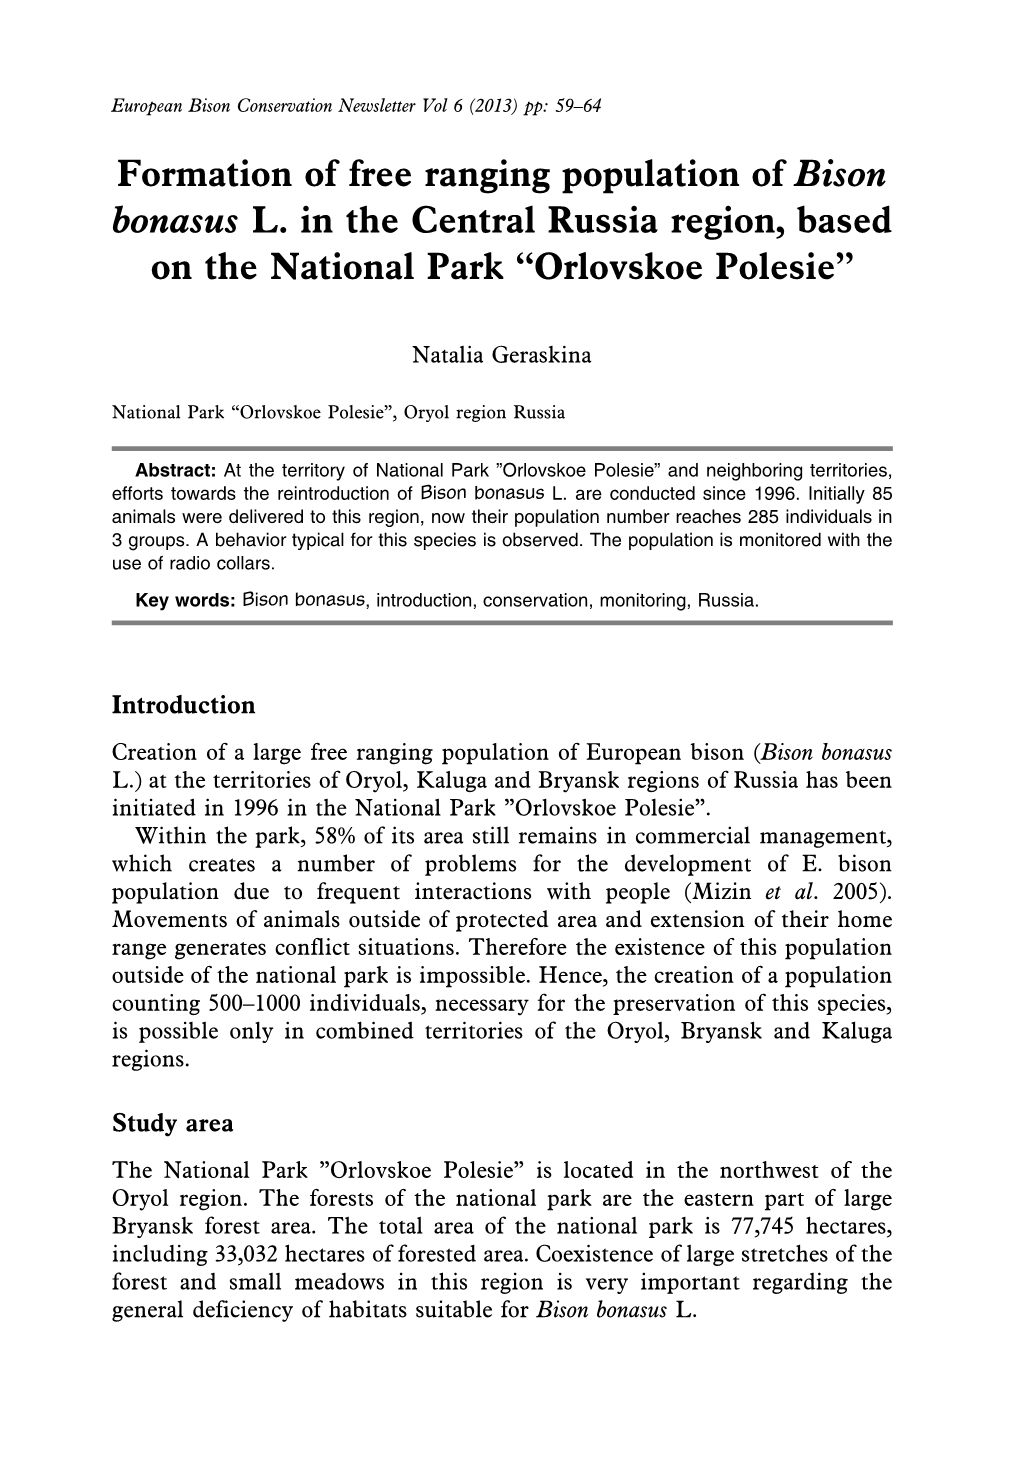 Formation of Free Ranging Population of Bison Bonasus L. in the Central Russia Region, Based on the National Park “Orlovskoe Polesie”